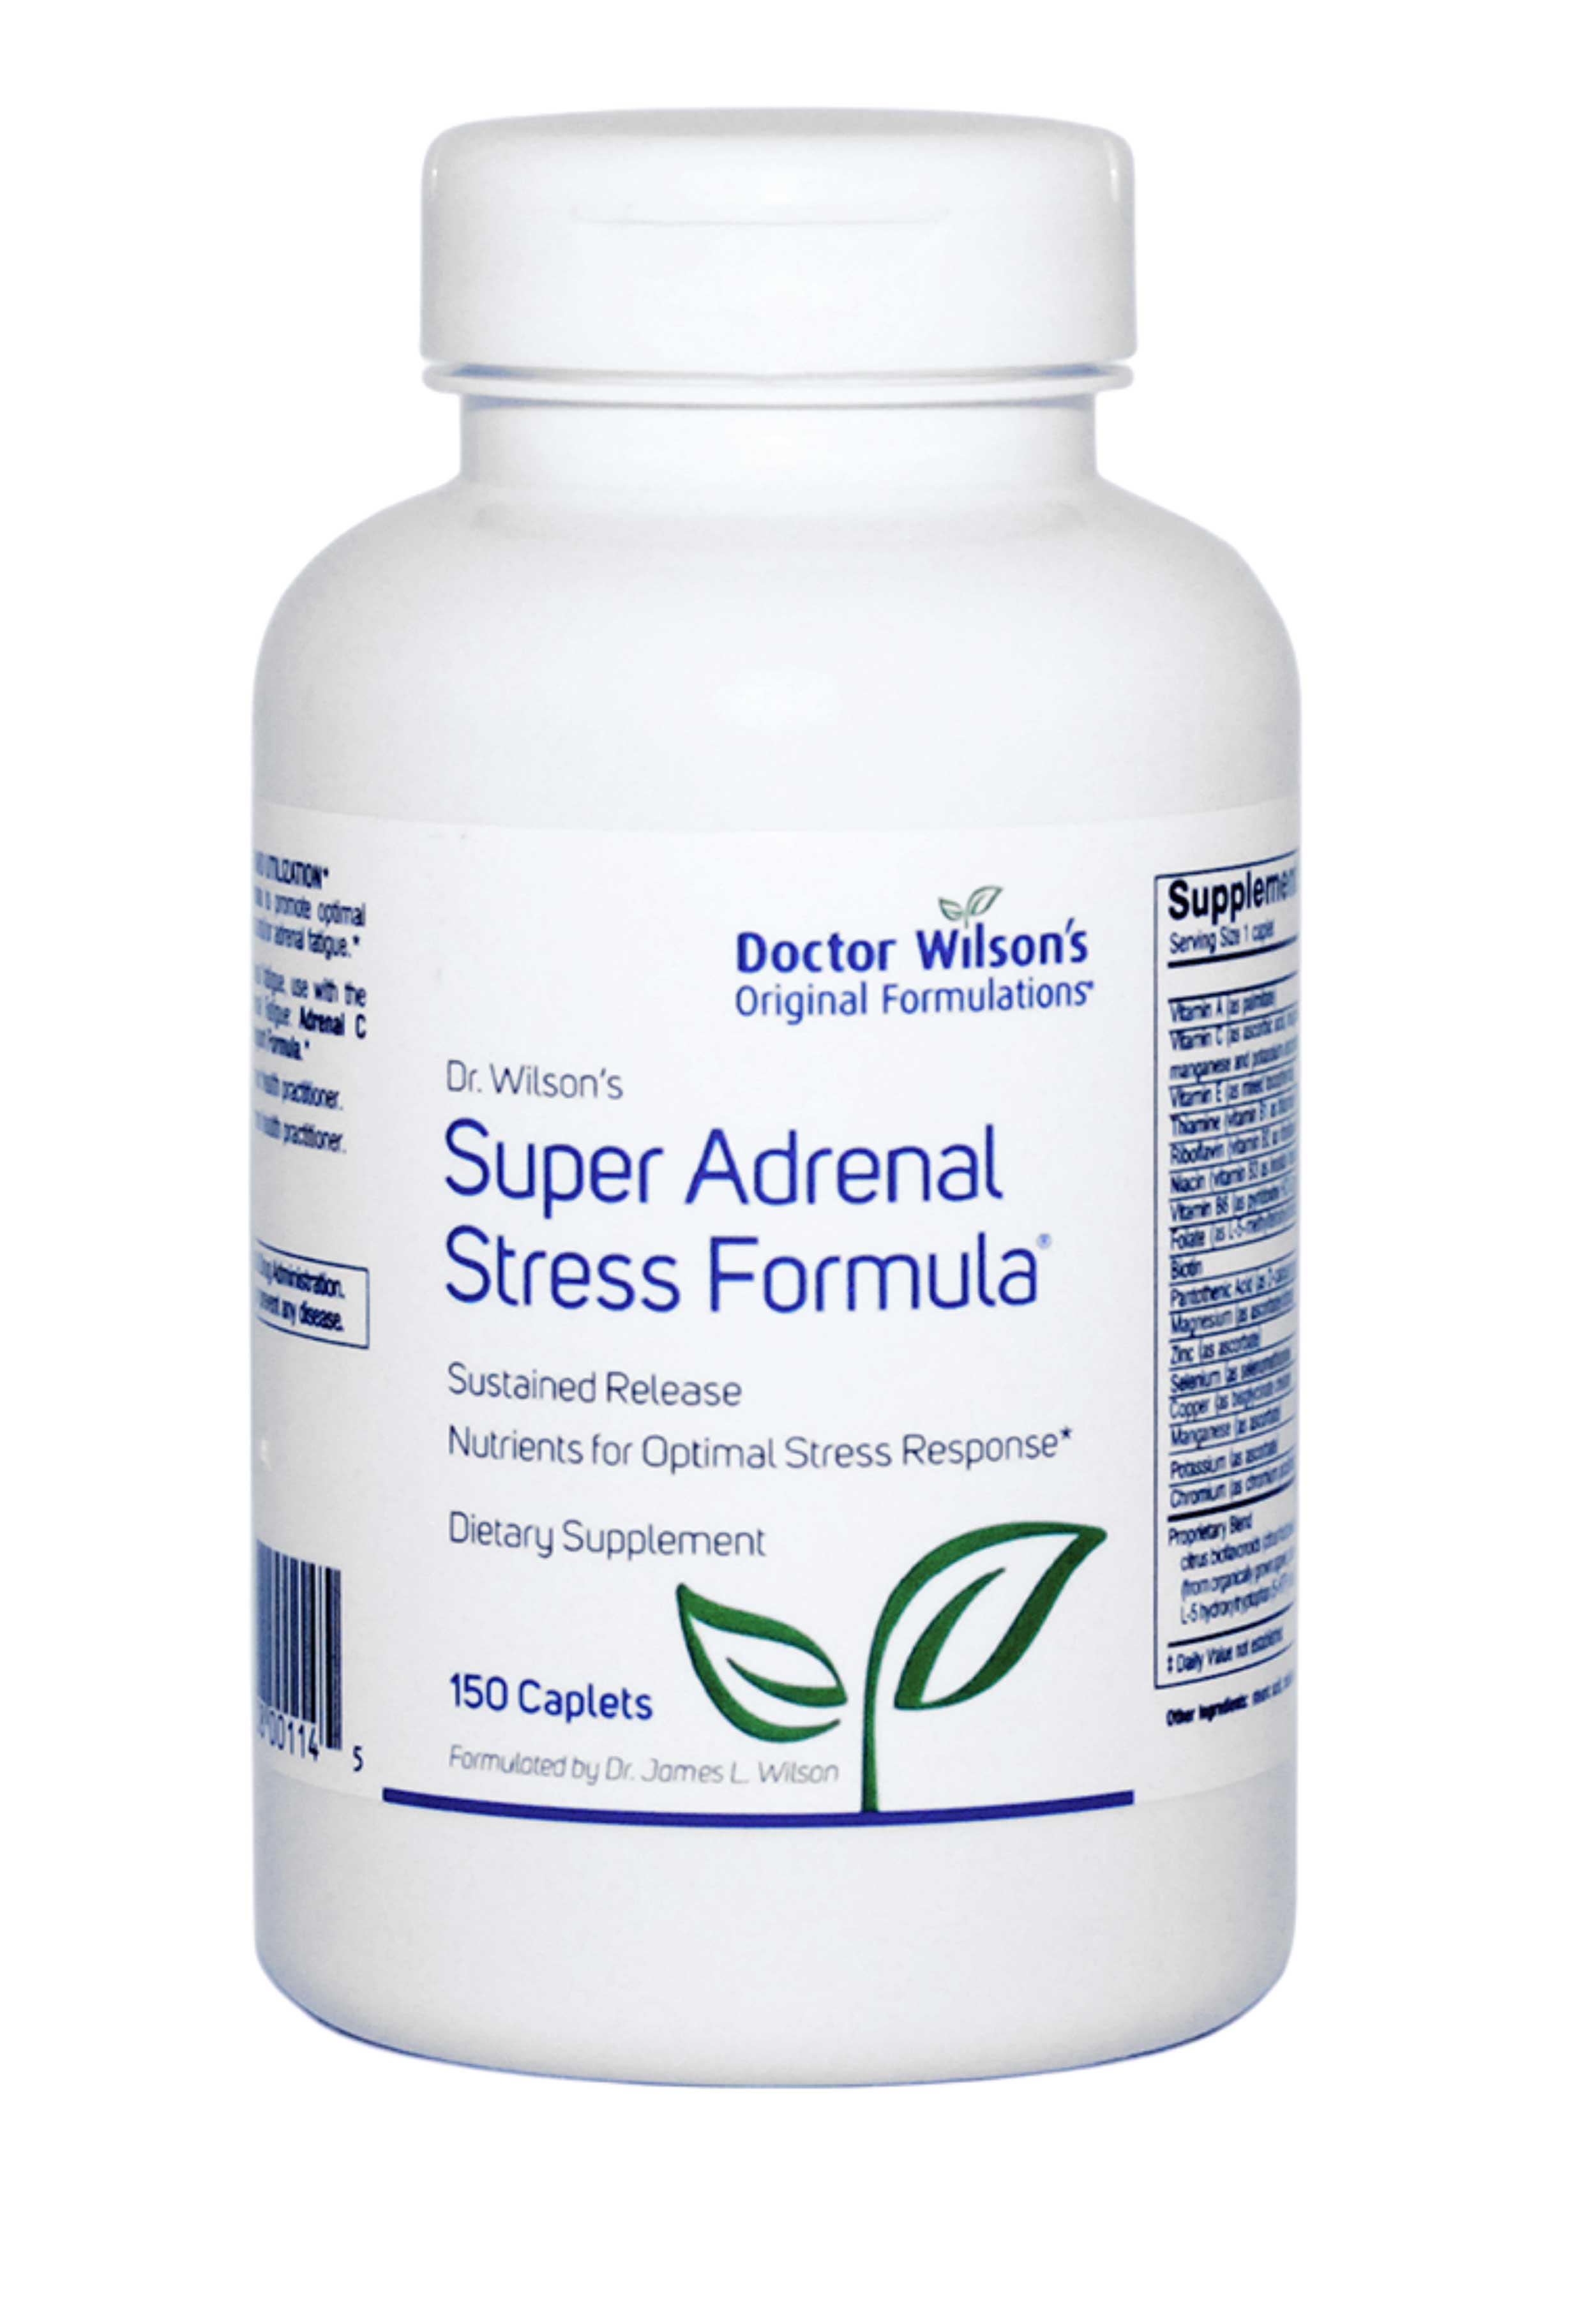 Doctor Wilson's Original Formulations Super Adrenal Stress Formula